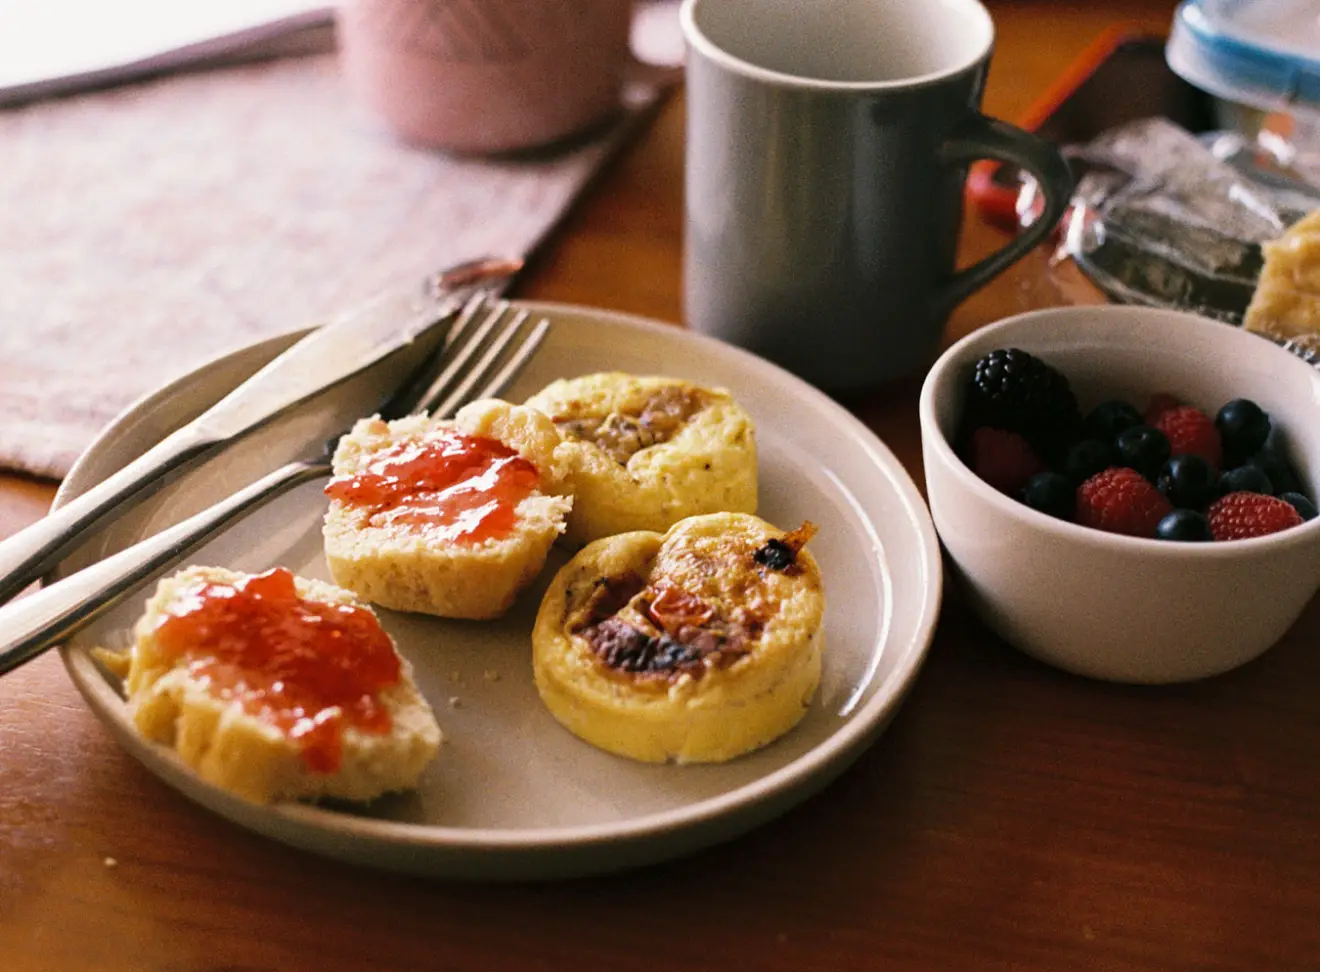 A plate of breakfast foods. Photograph by Jordan Romanoff